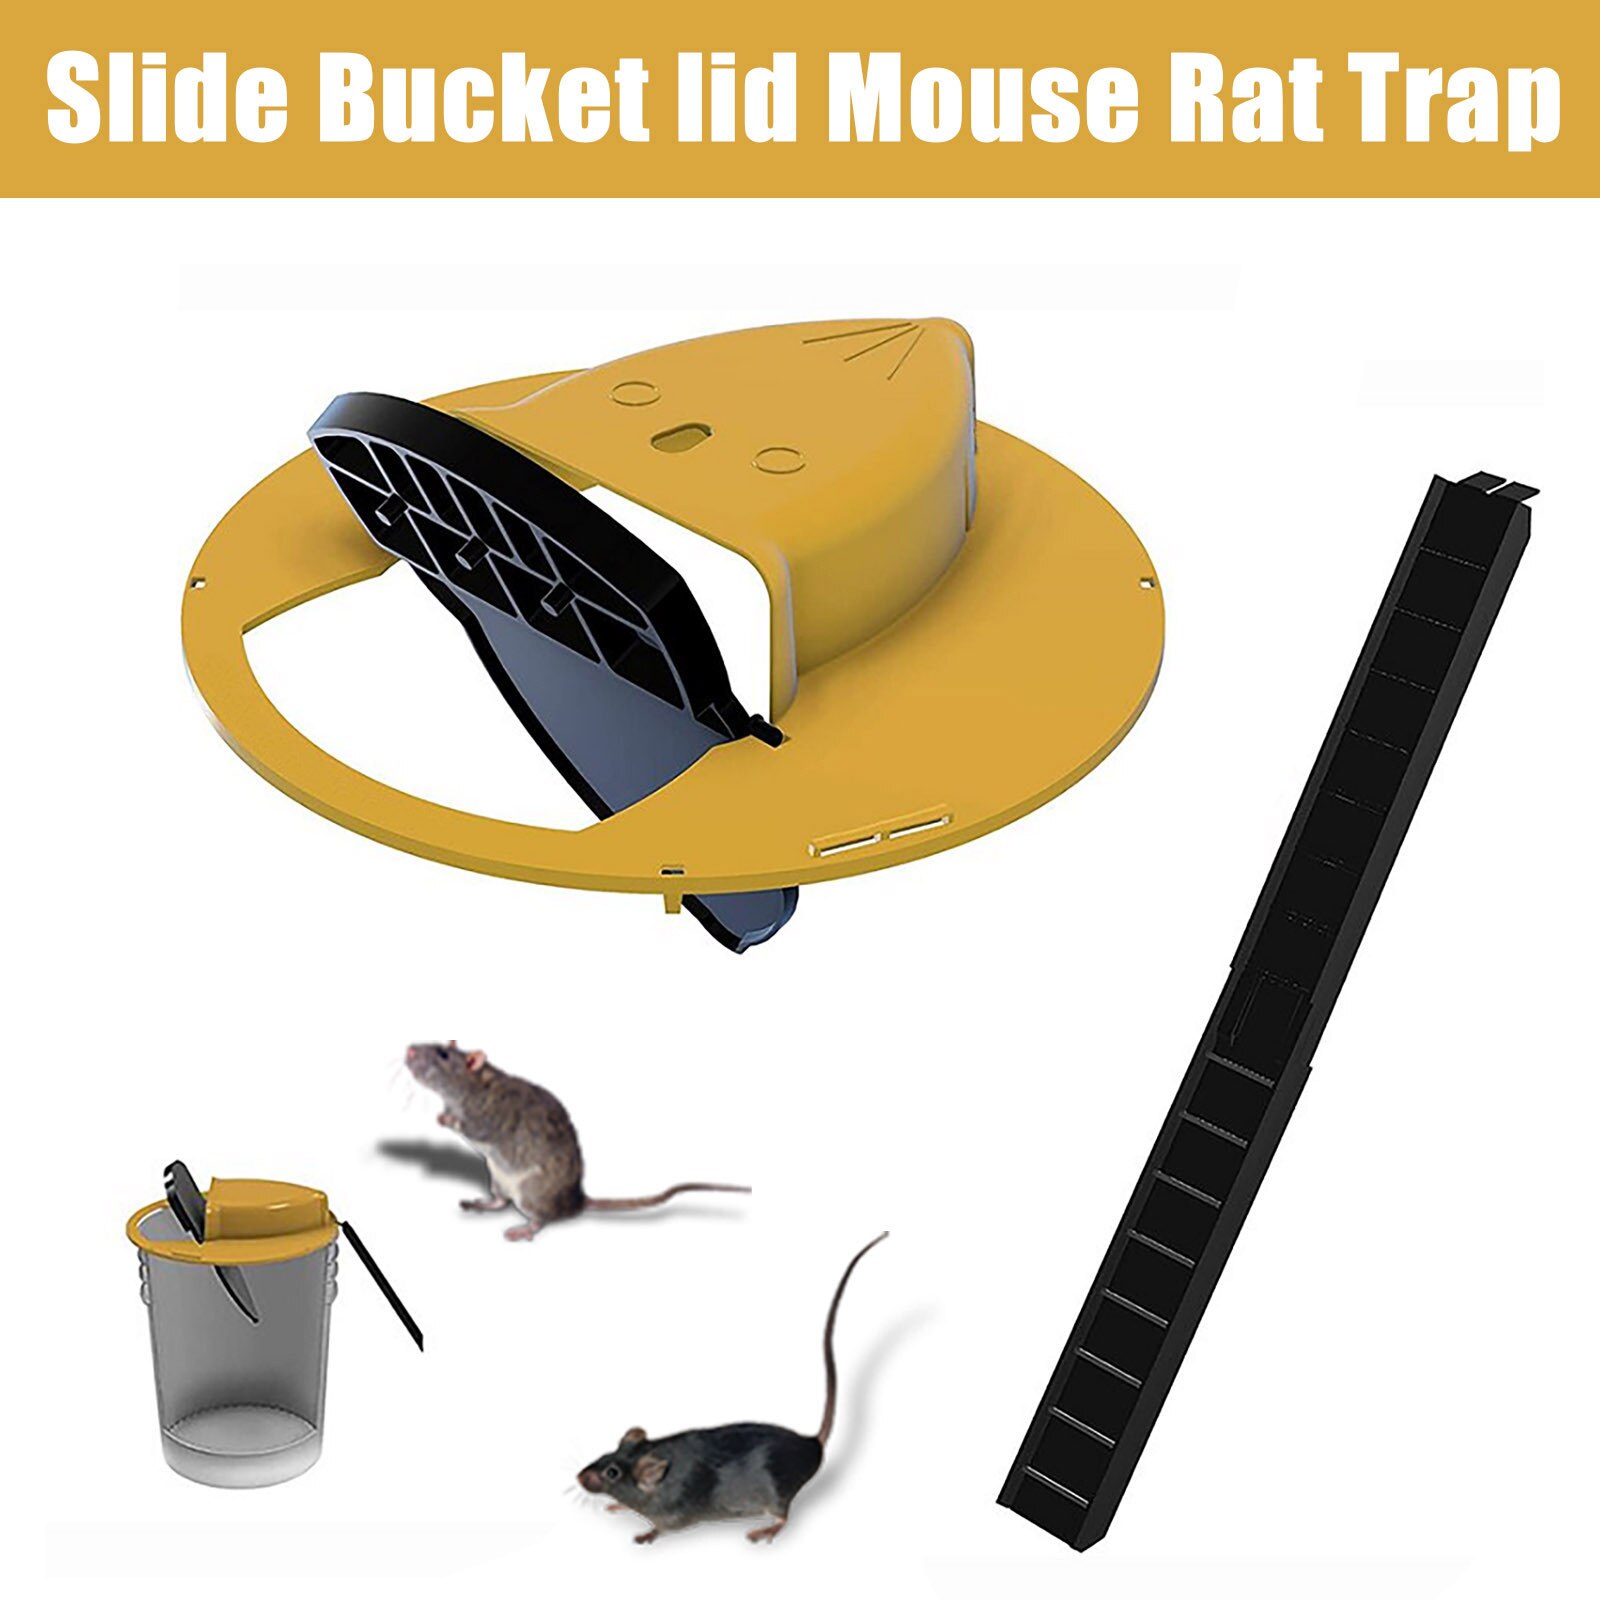 https://bti-tool.com/images/detailed/4/Reusable-Plastic-Smart-Mouse-Trap-Flip-N-Slide-Bucket-Lid-Mouse-Rat-Trap-Mouse-trap-Humane_v2kv-z3.jpg